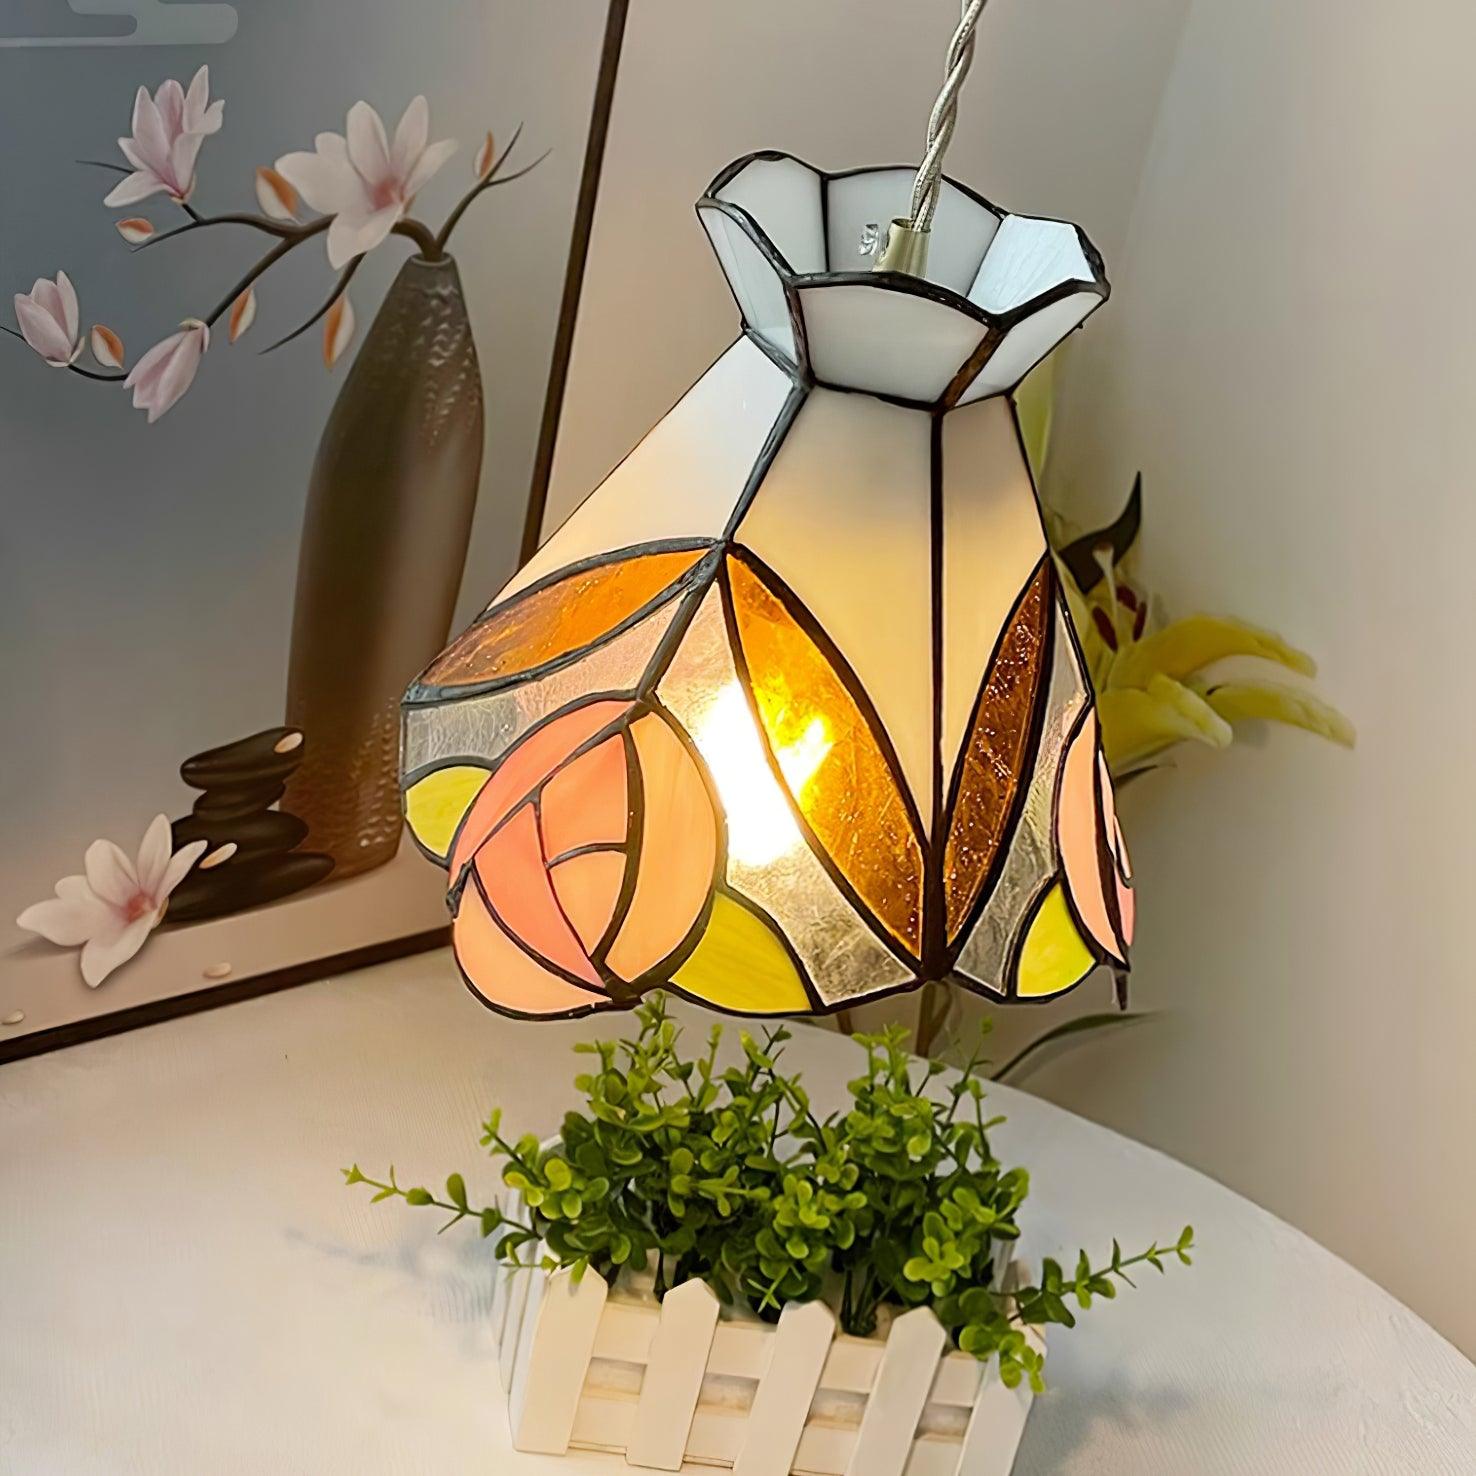 Tiffany Rose Pendant Lamp